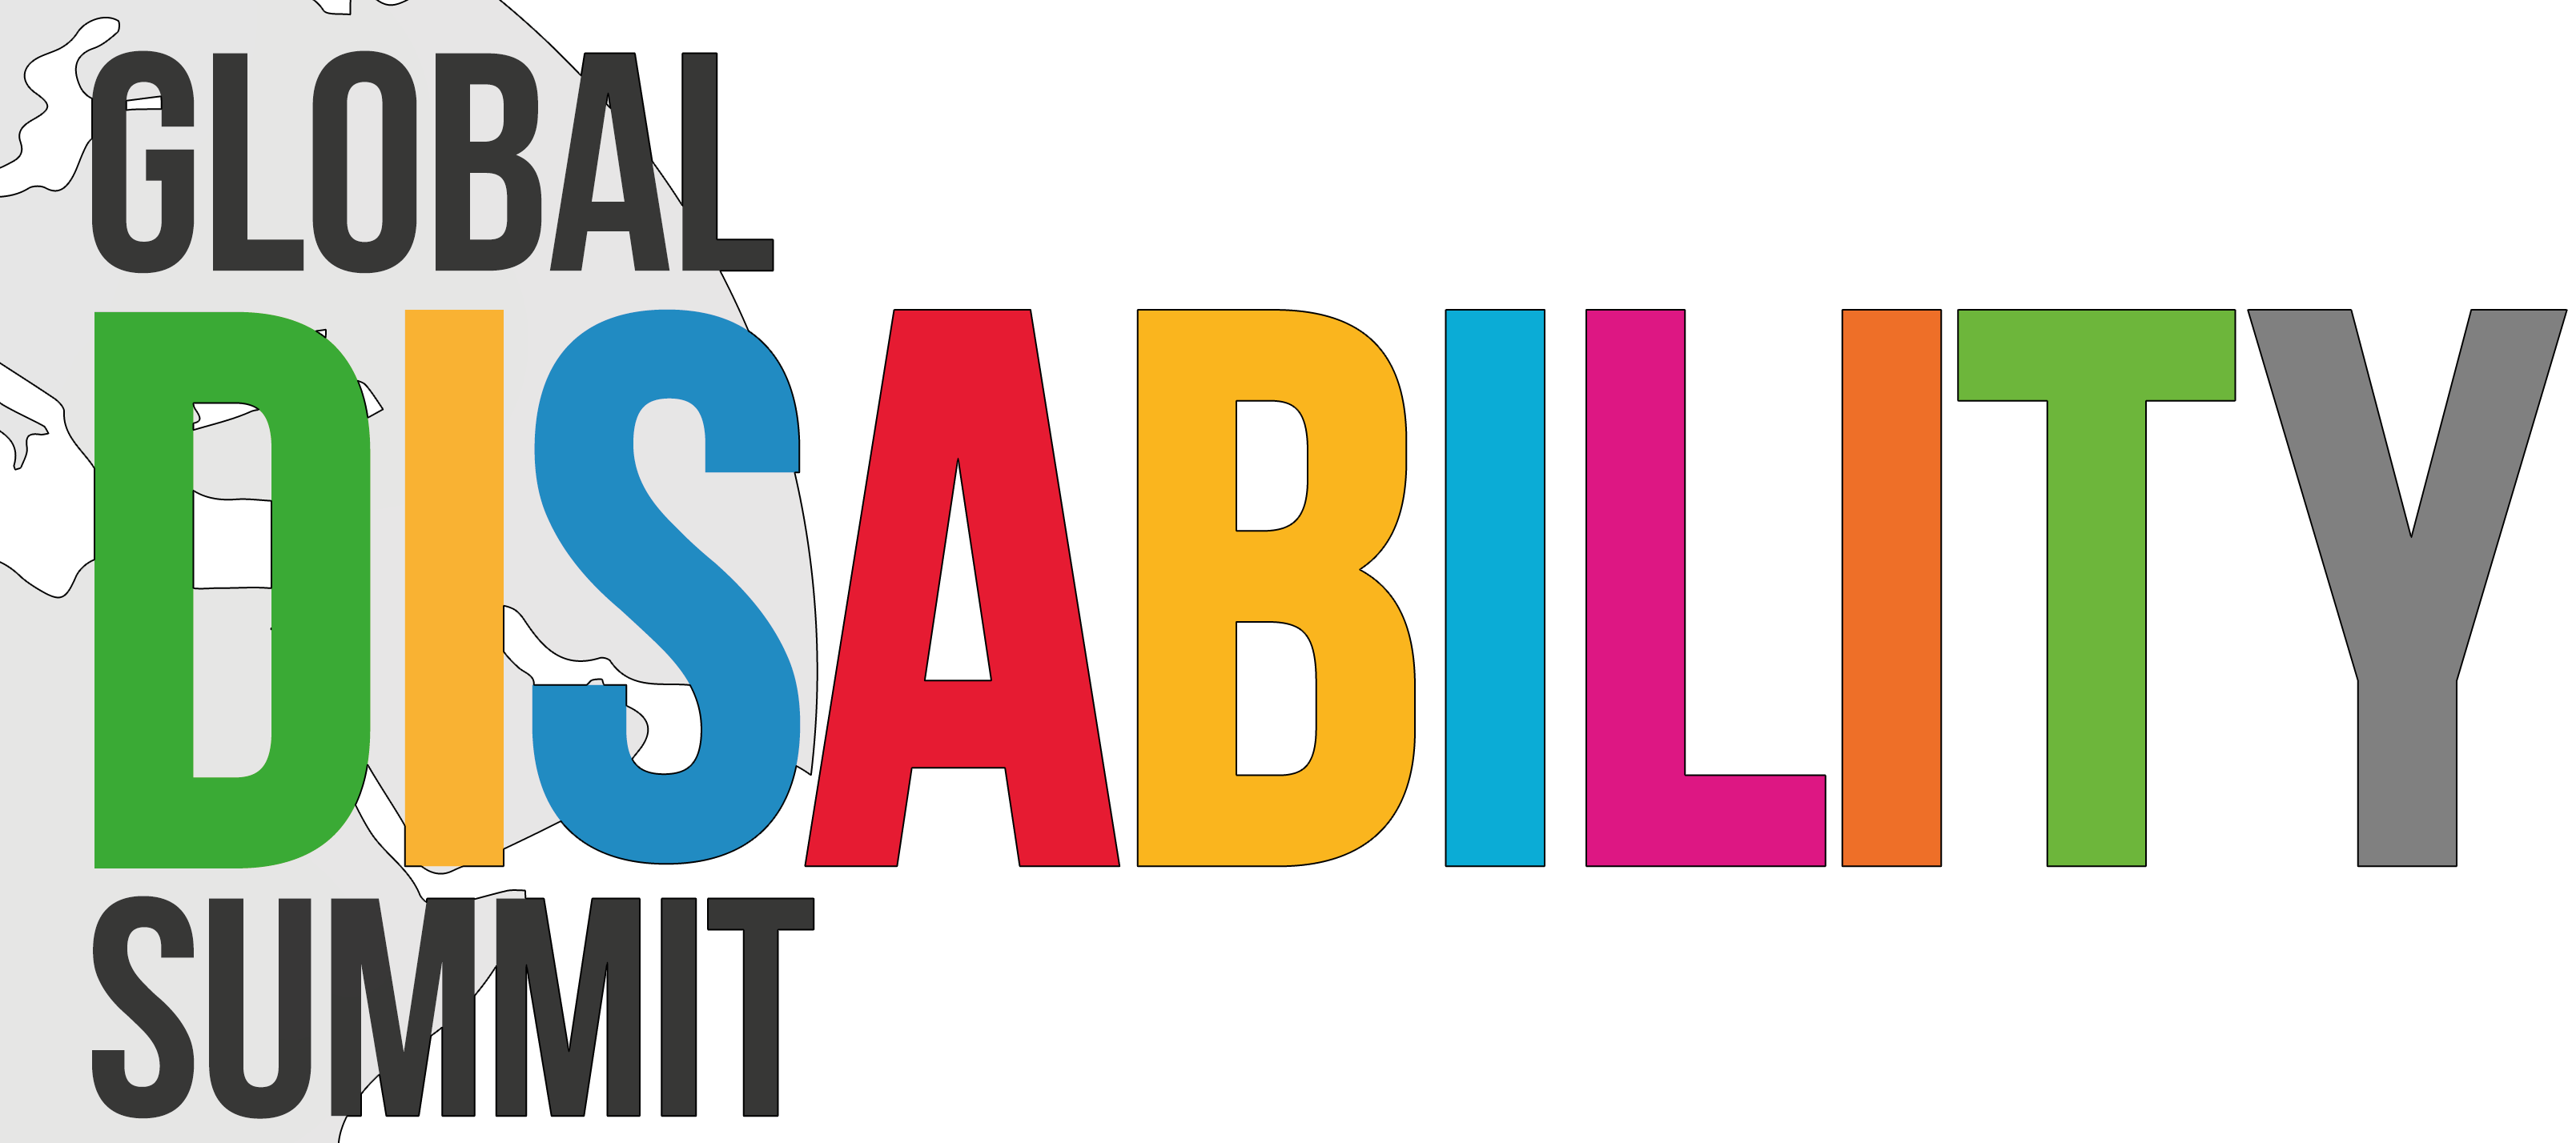 Global Disability Summit logo.